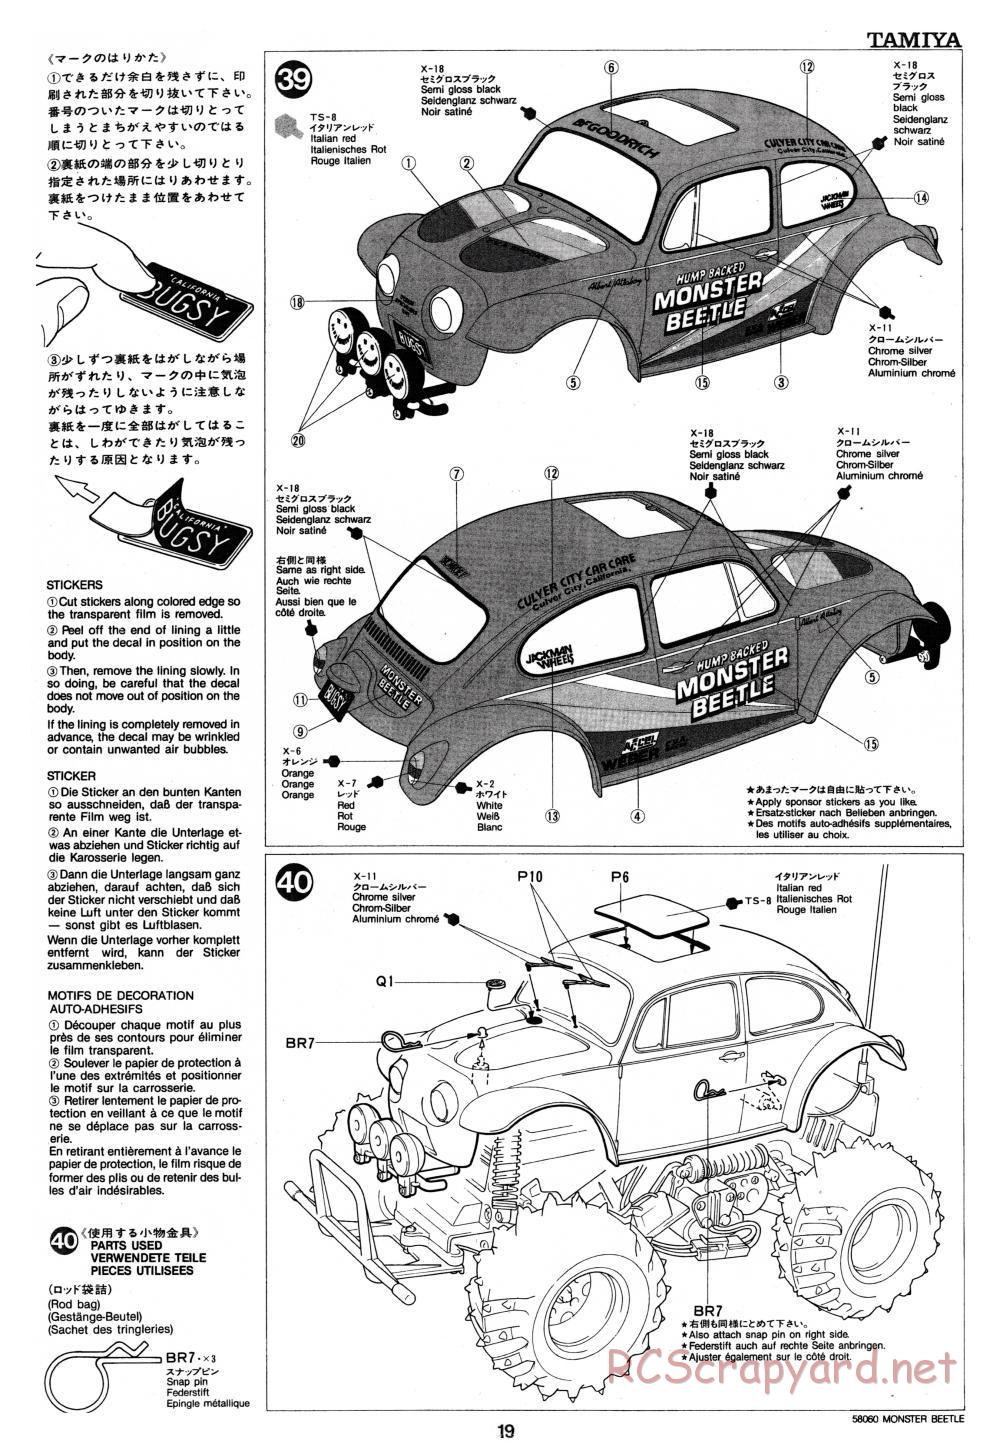 Tamiya - Monster Beetle - 58060 - Manual - Page 19